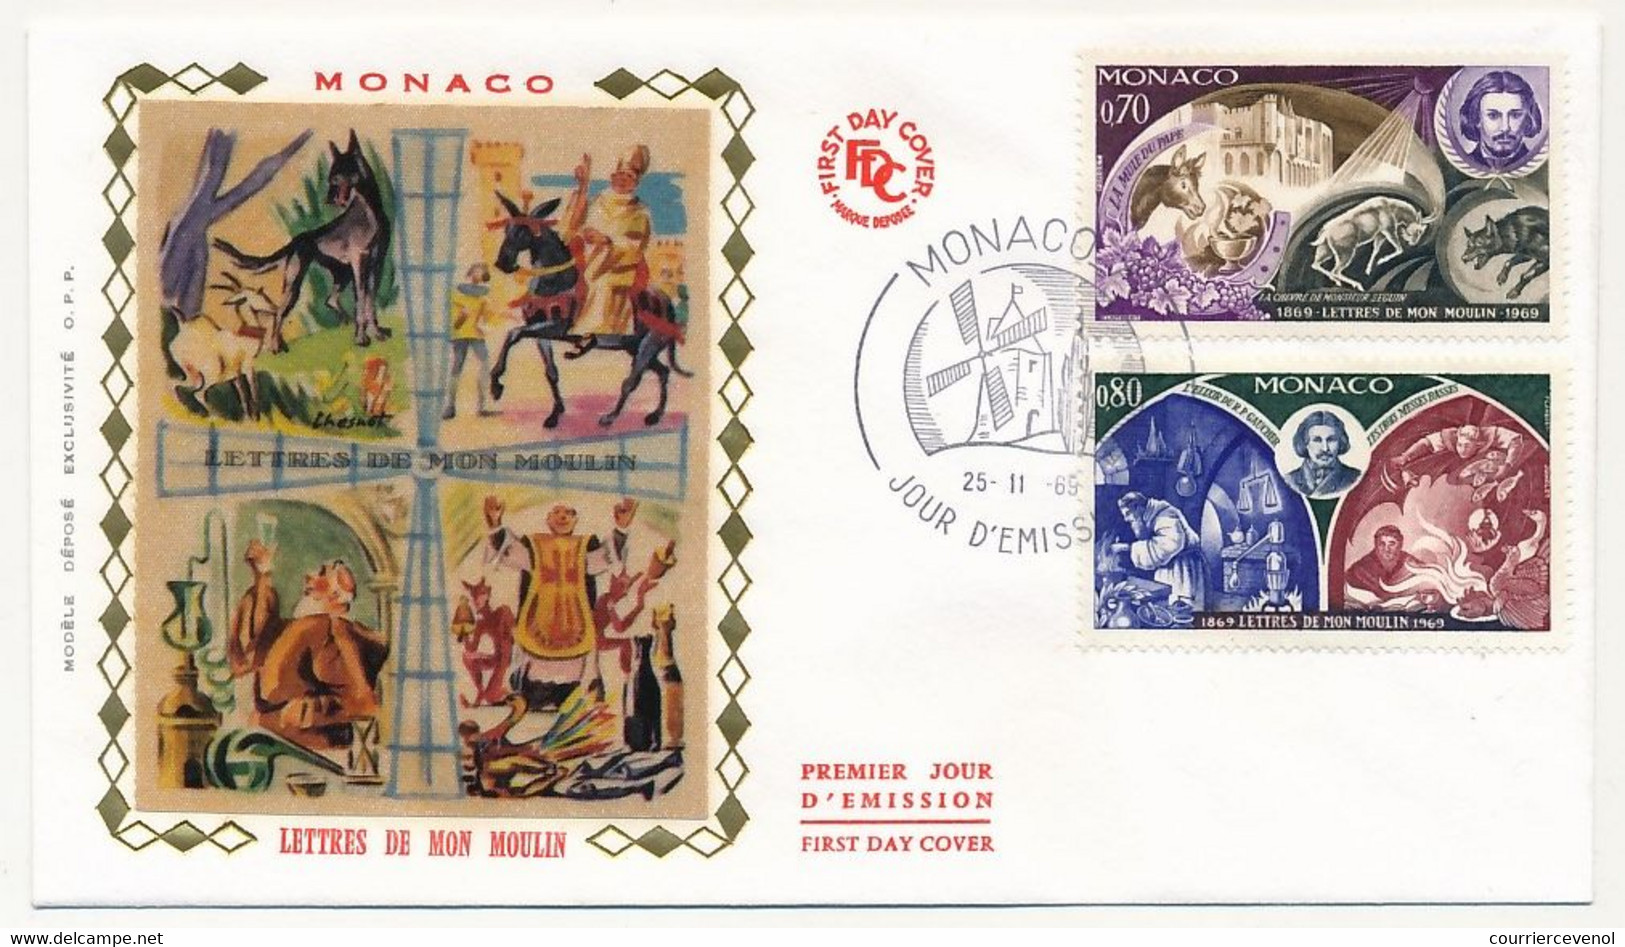 MONACO => 3 Env FDC Soie - 5 Valeurs "Lettres De Mon Moulin" - Monaco A - 25/11/1969 - FDC